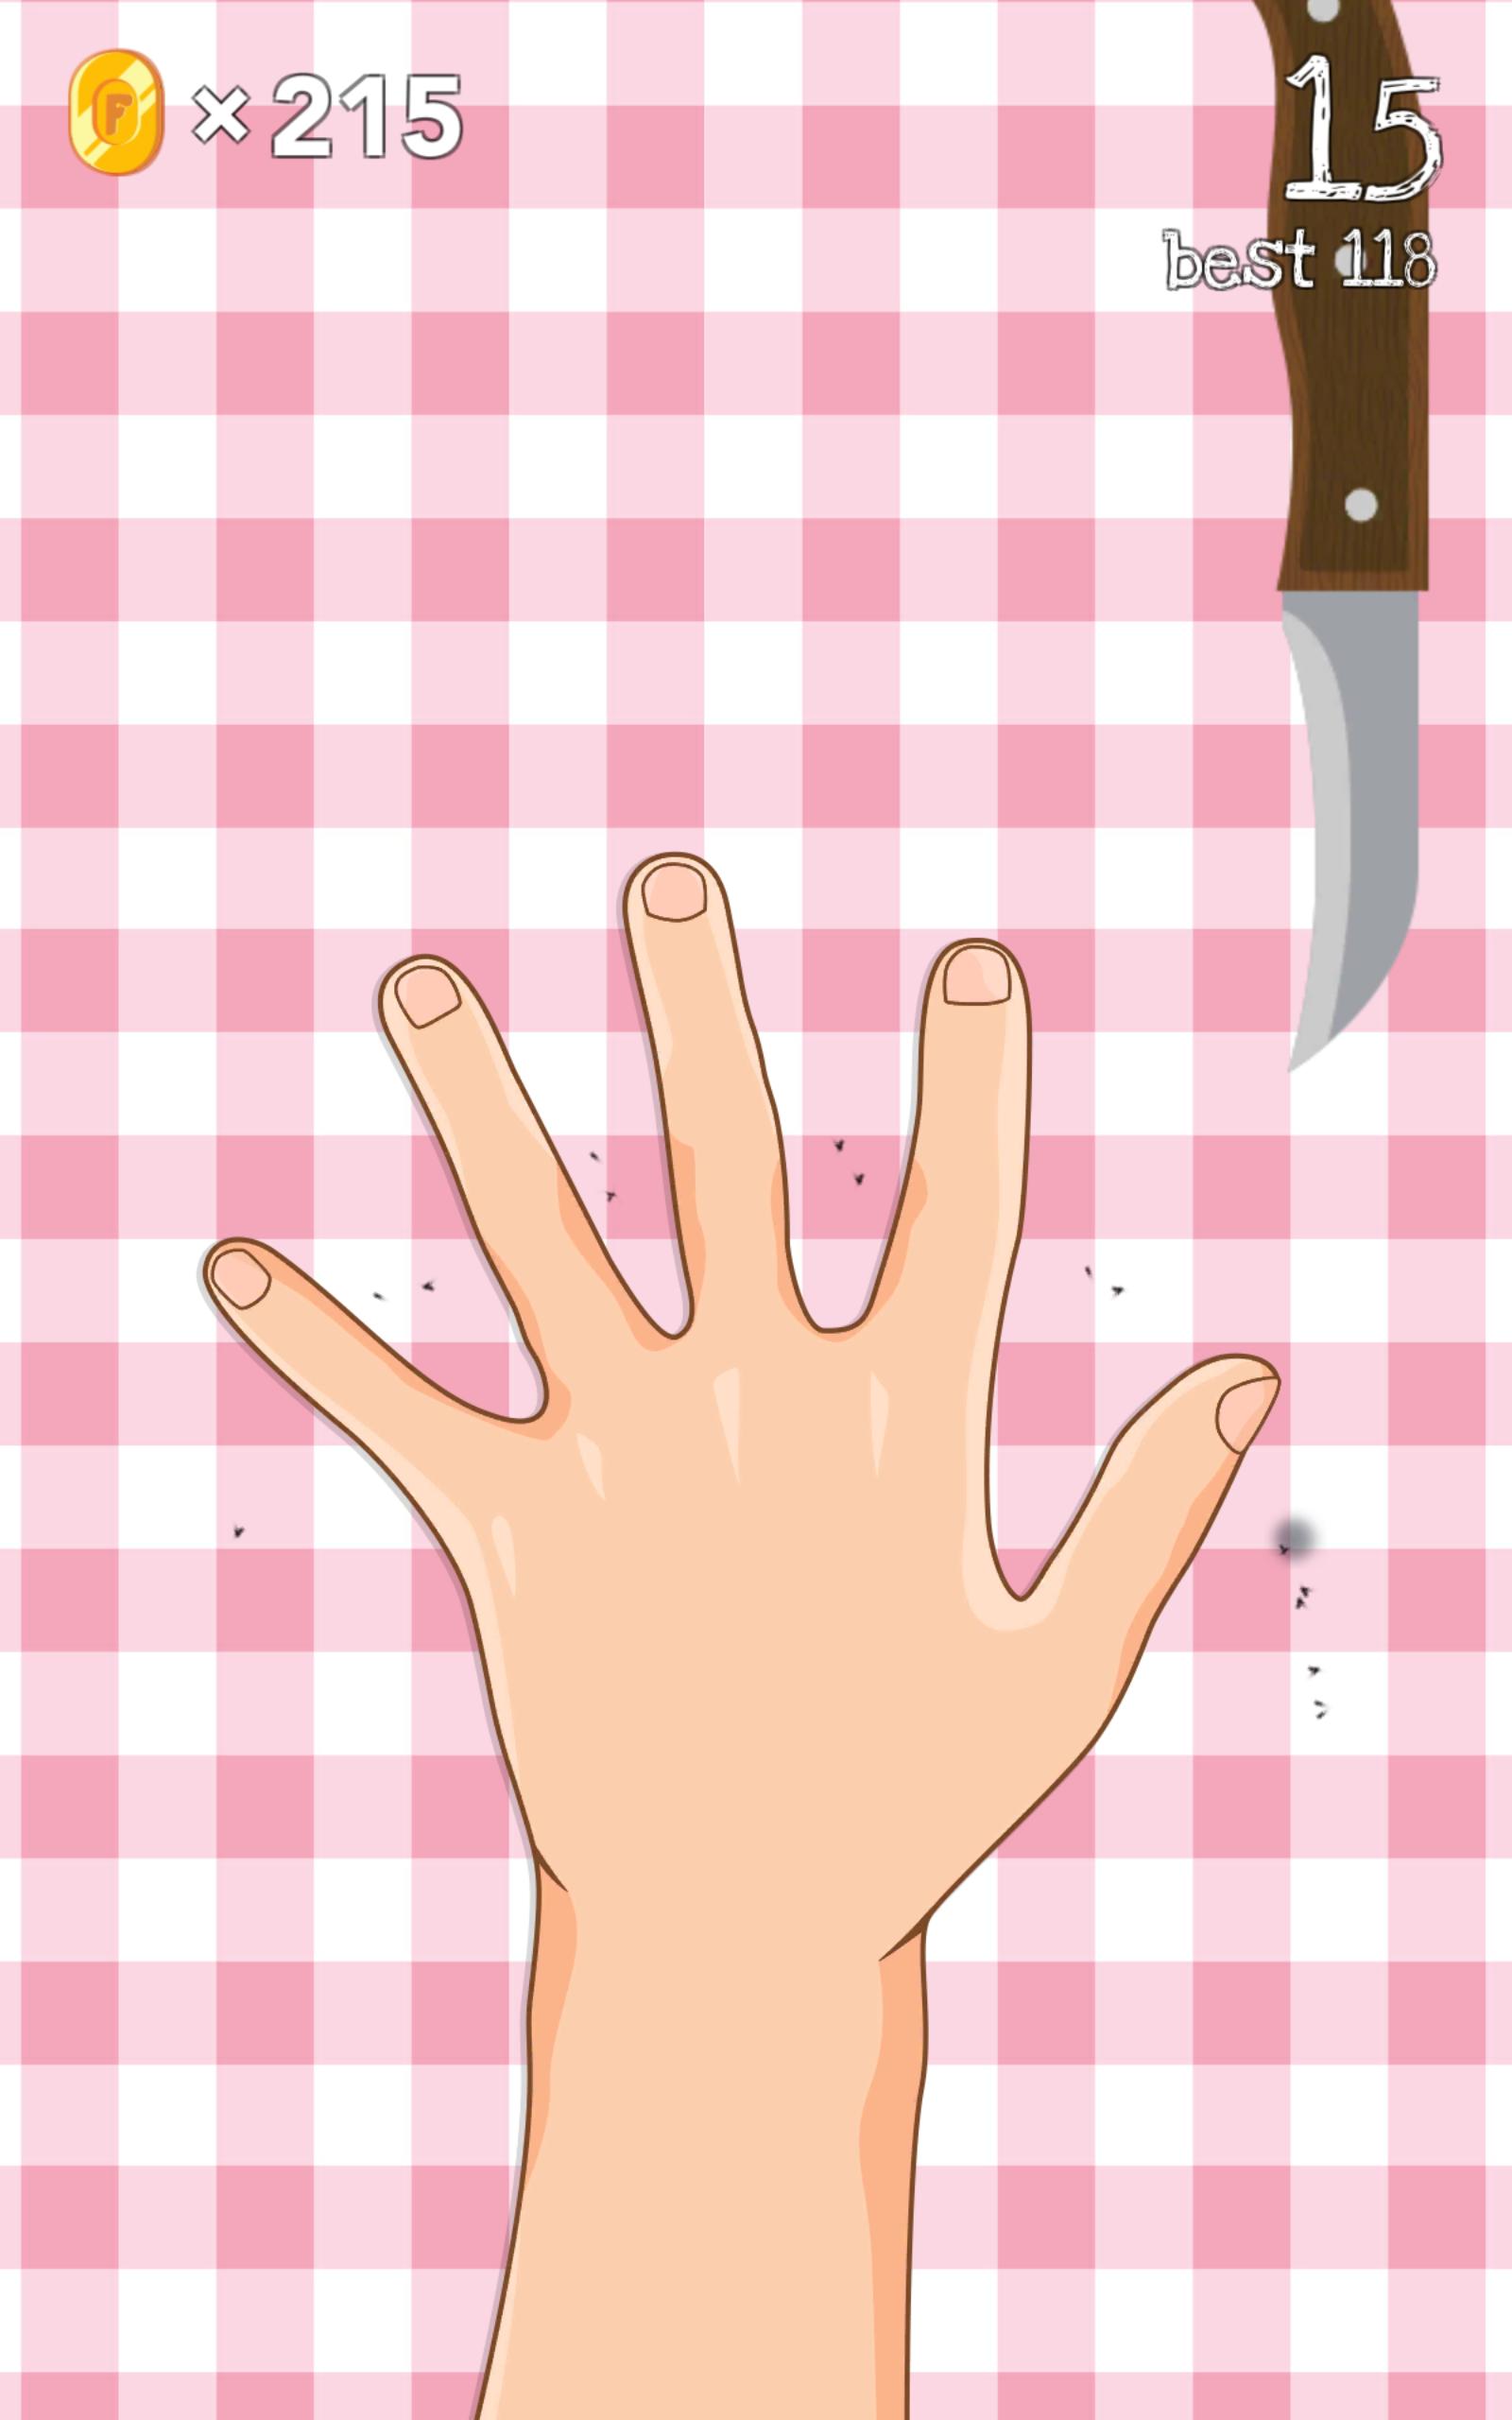 4 Fingers - free knife games 3.4 Screenshot 13